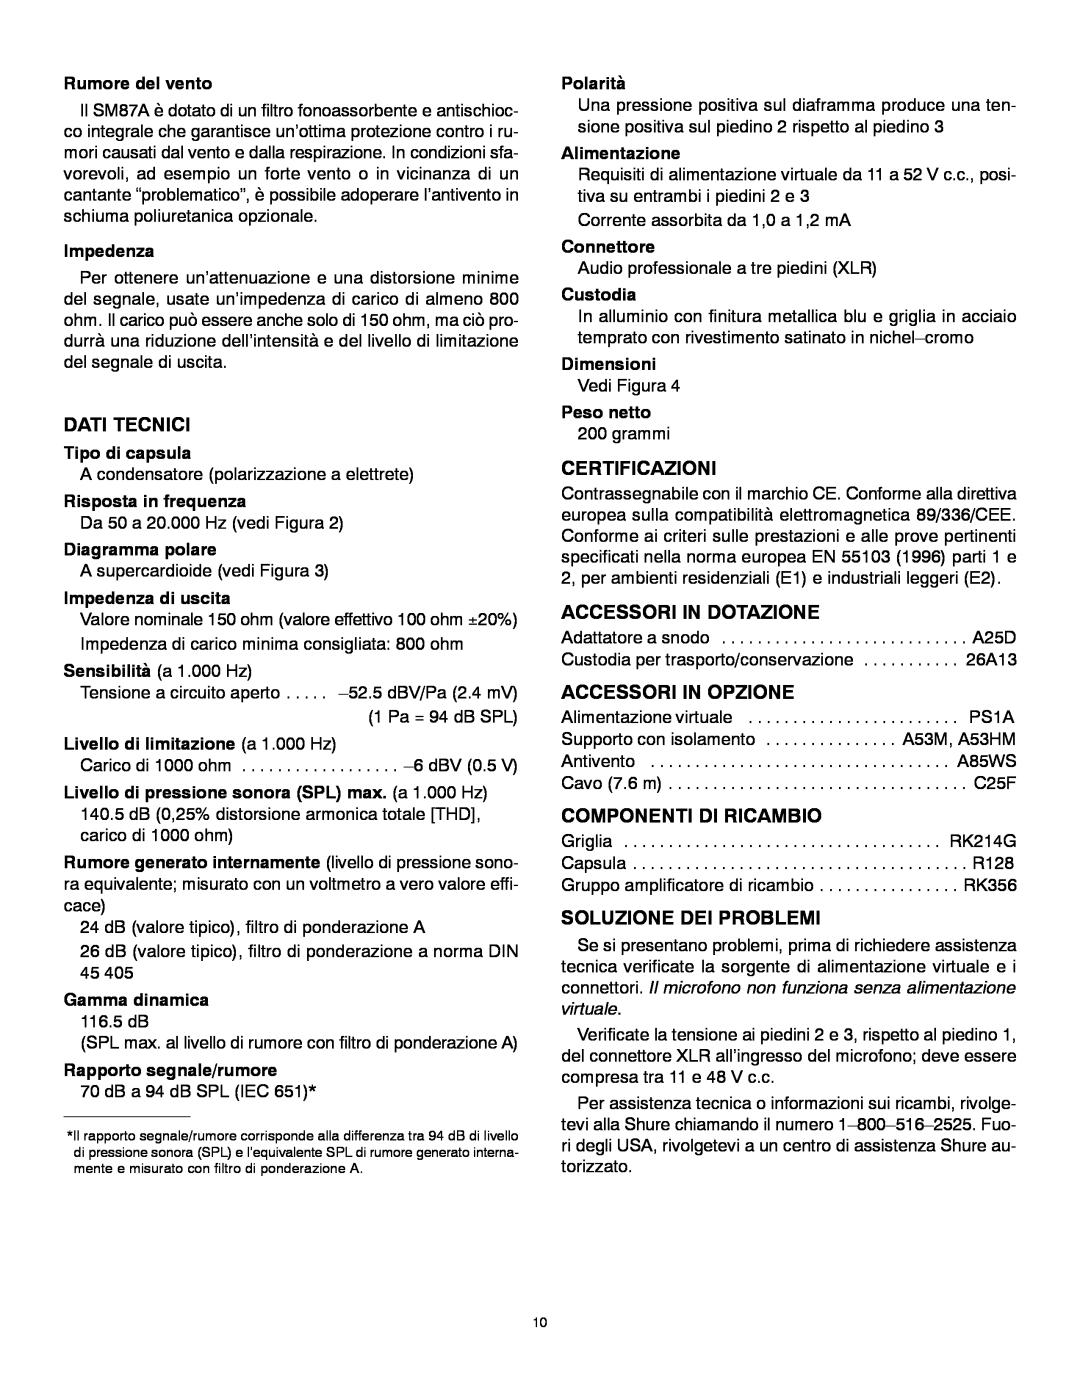 Shure SM87A manual Dati Tecnici, Certificazioni, Accessori In Dotazione, Accessori In Opzione, Componenti Di Ricambio 